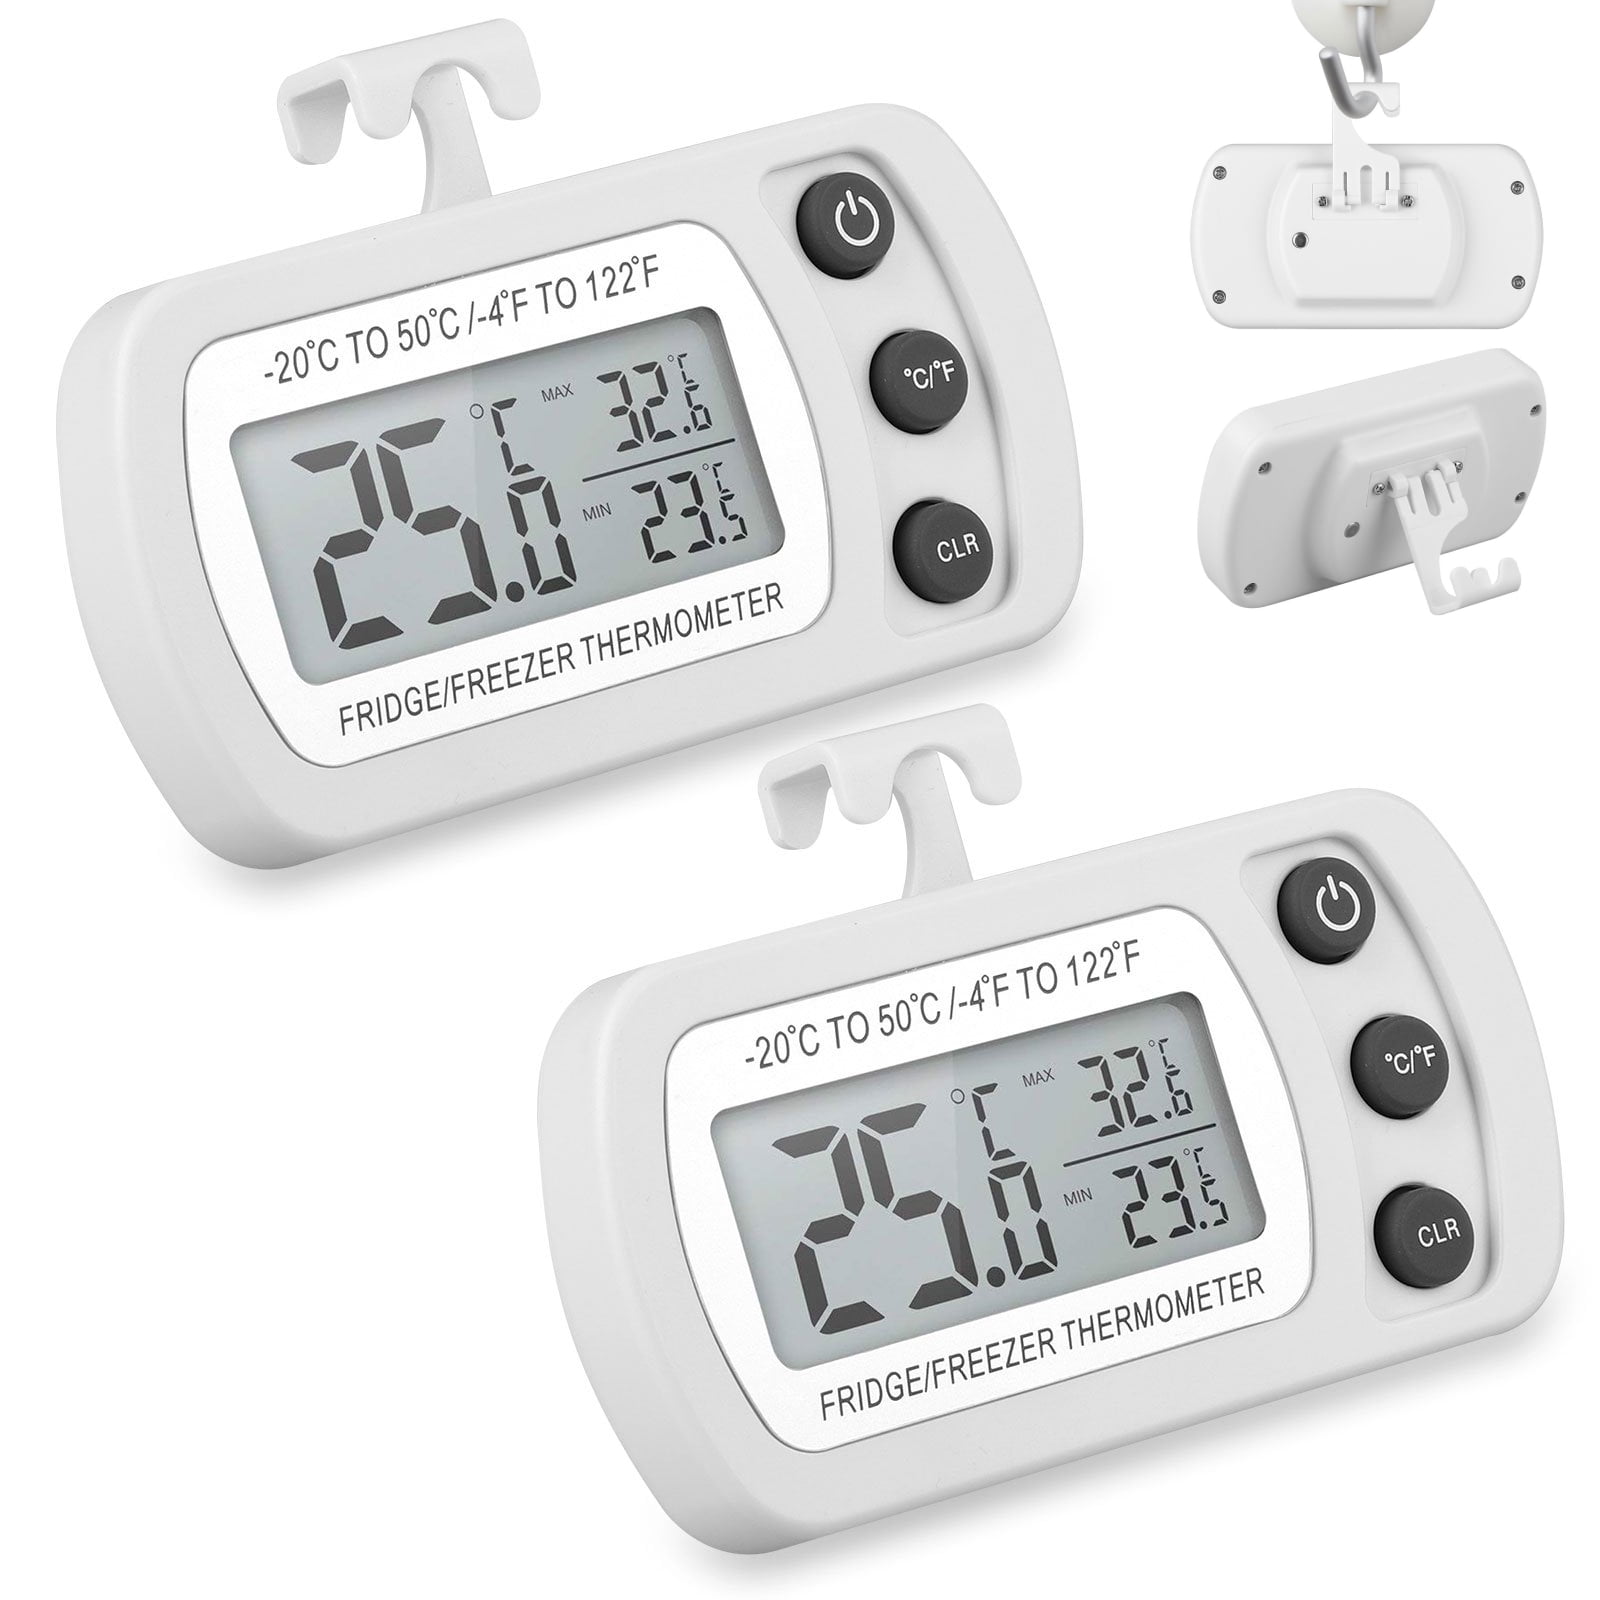 1pc Refrigerator Alarm Thermometer Digital Wireless Fridge Freezer Temperature 